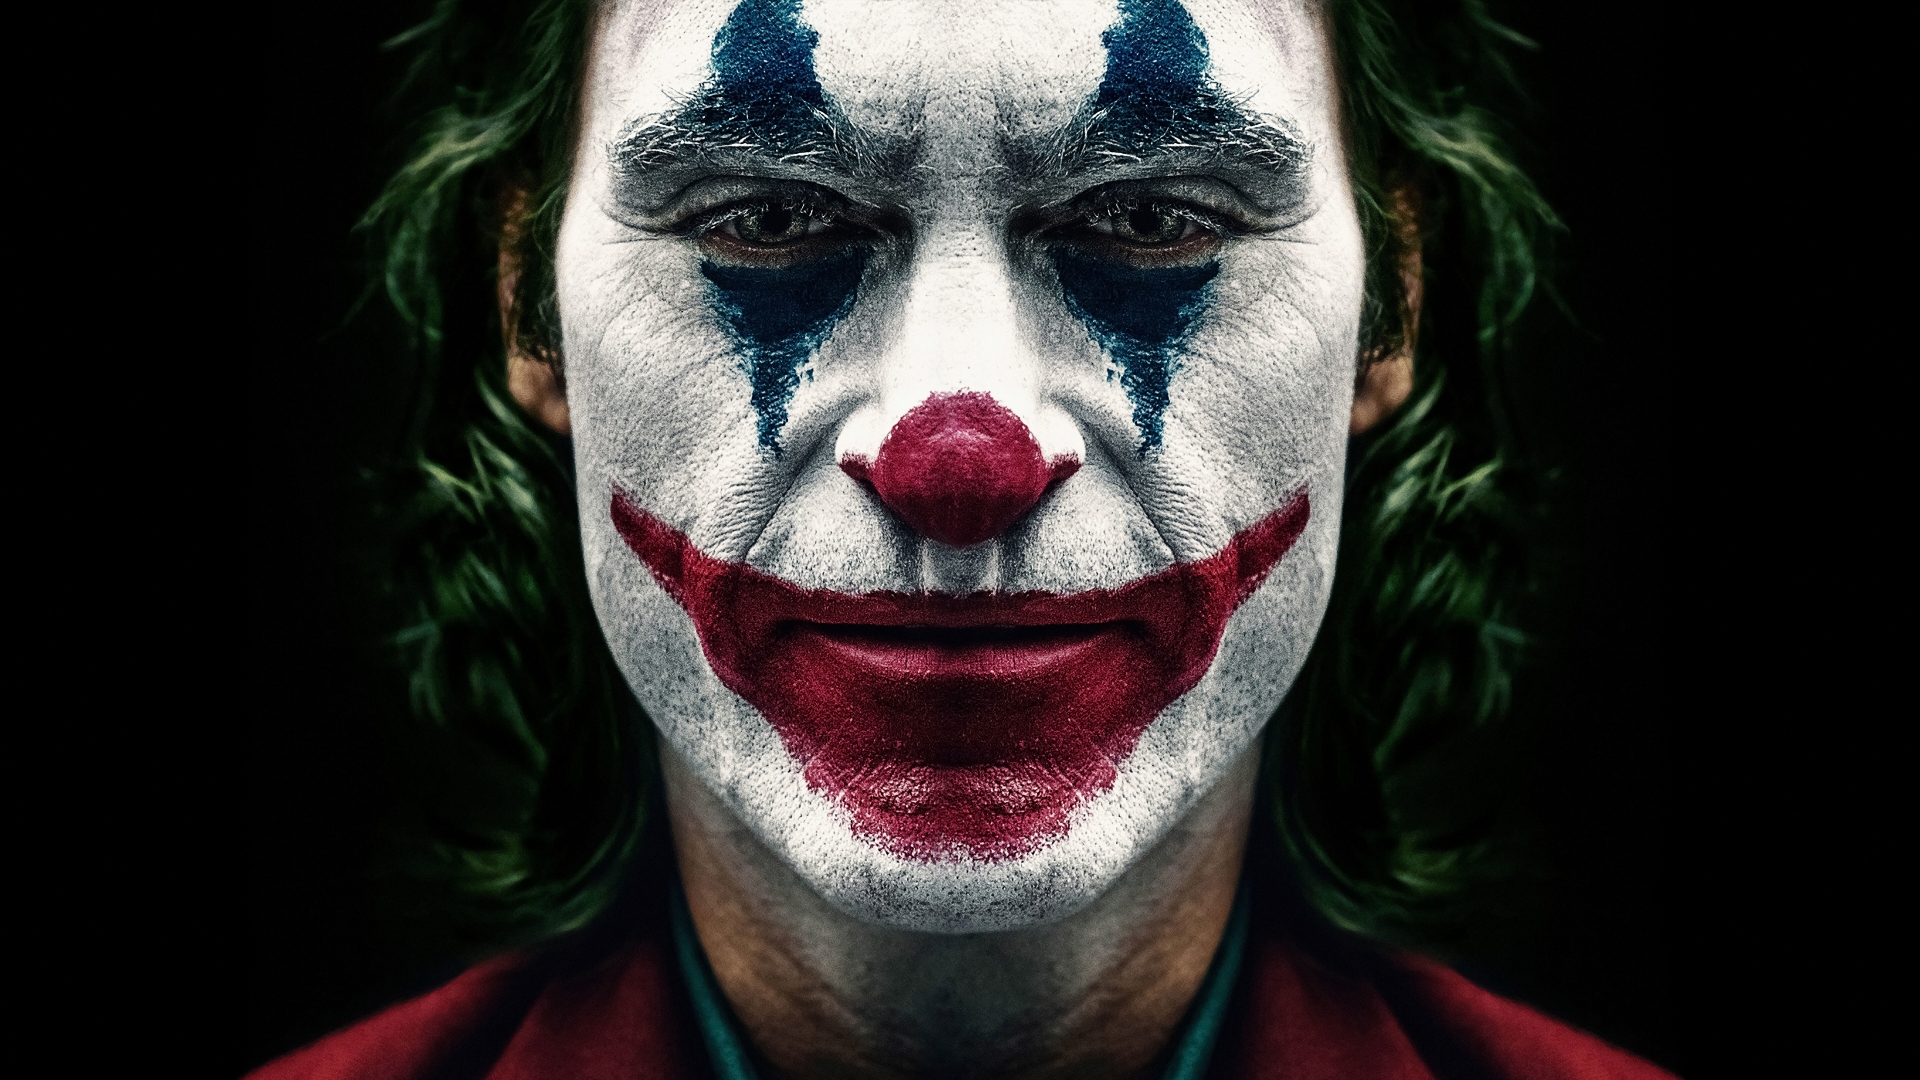 Joker Movie with Joaquin Phoenix Wallpaper 8k Ultra HD ID:3806